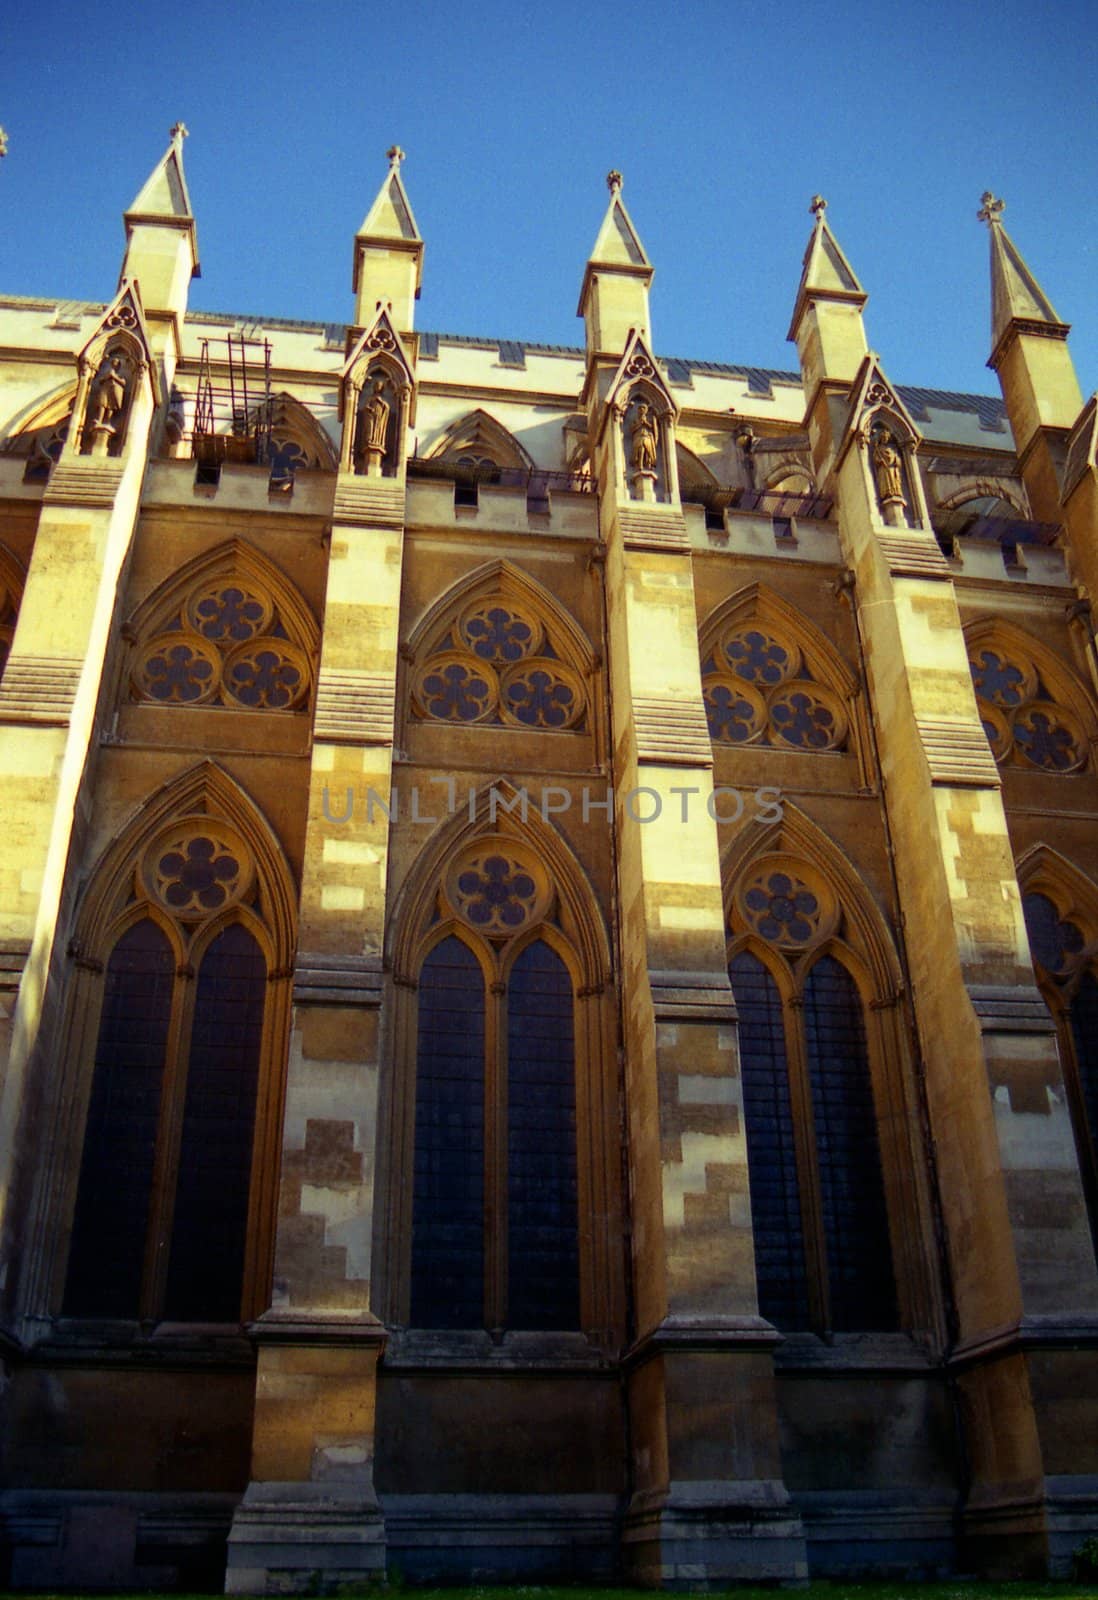 Facade of gothic builiding in London England